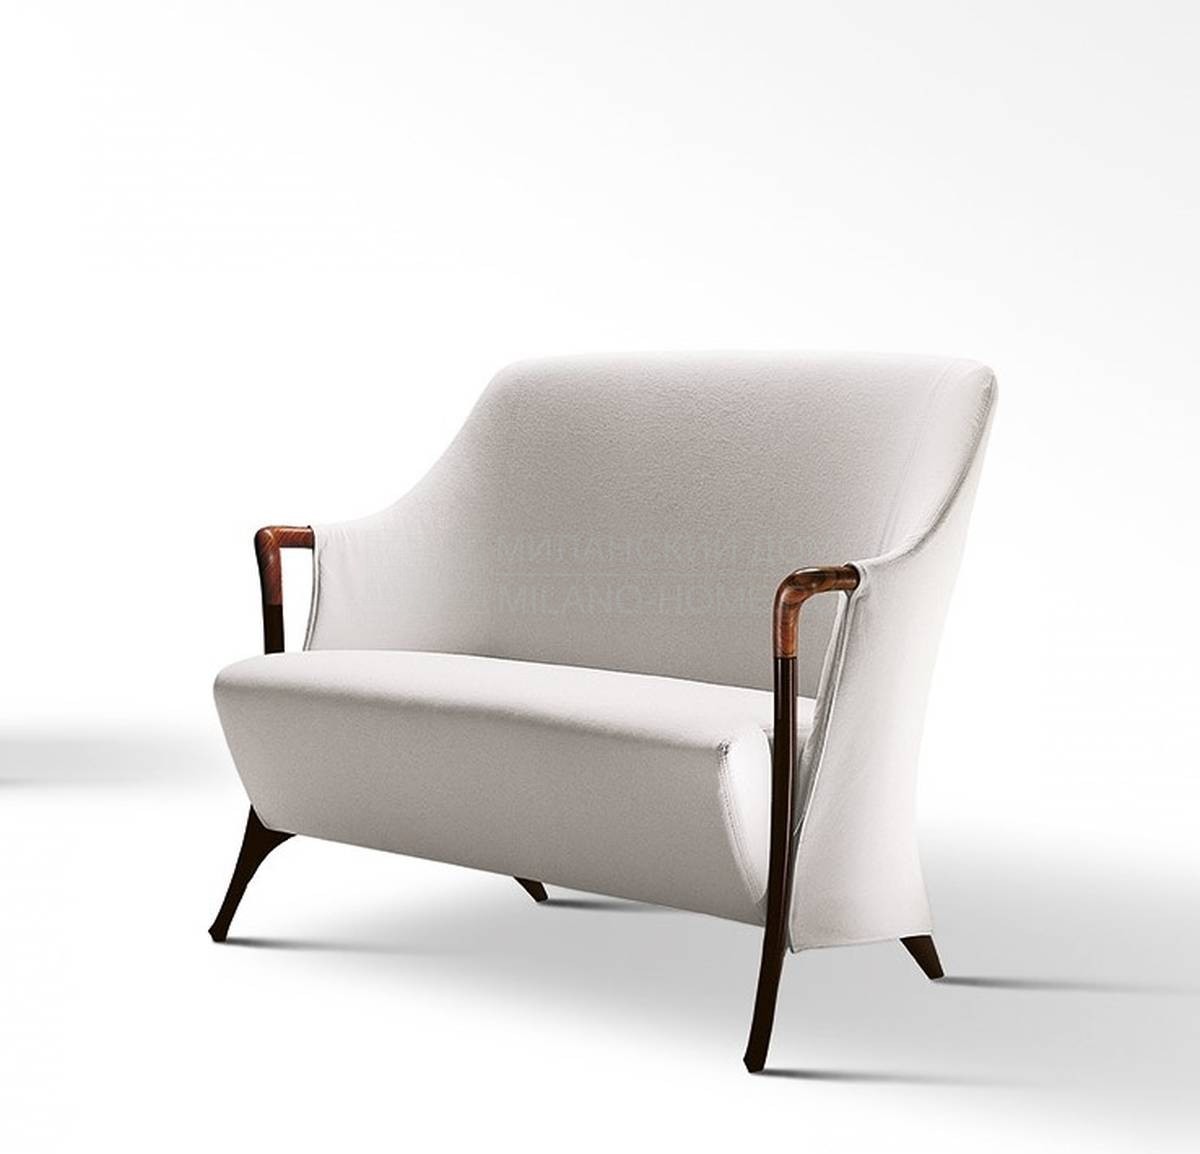 Прямой диван Progetti Original High sofa / 63262 из Италии фабрики GIORGETTI